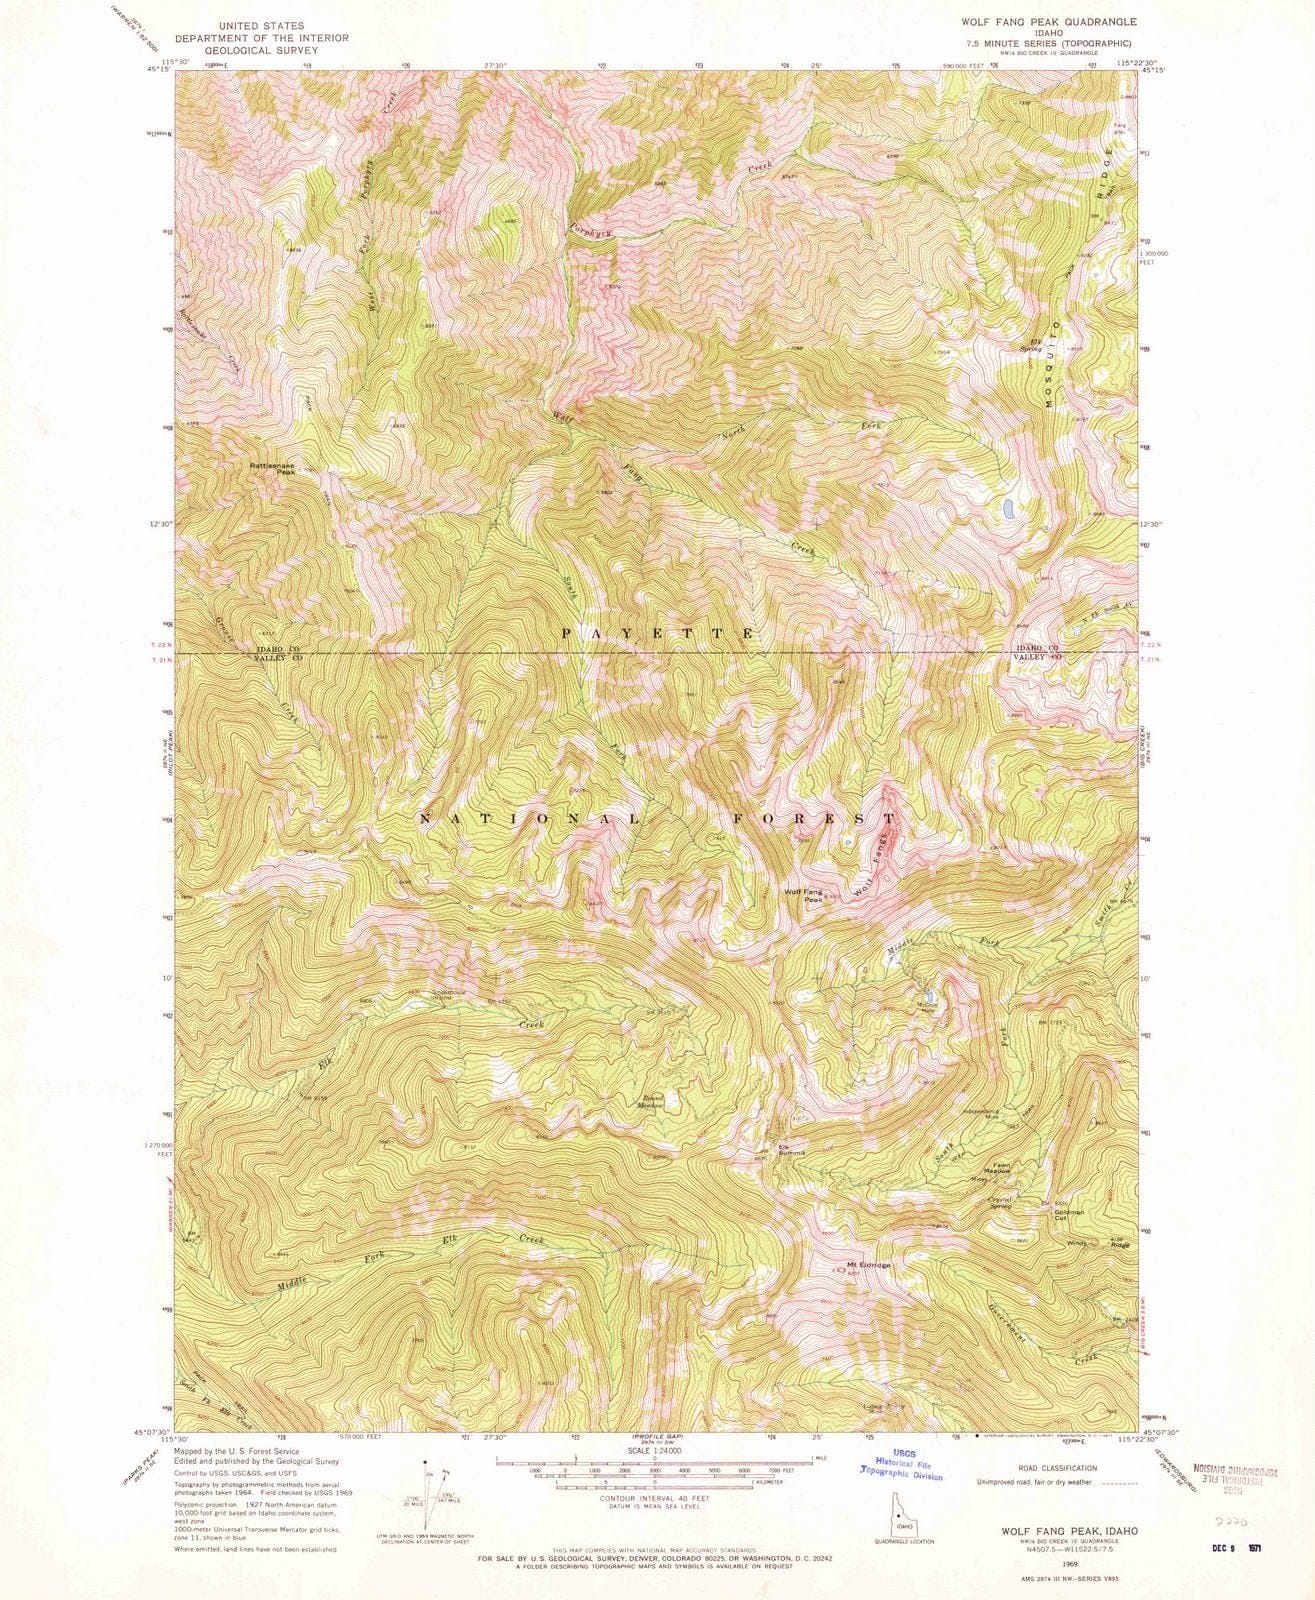 1969 Wolf Fang Peak, ID - Idaho - USGS Topographic Map